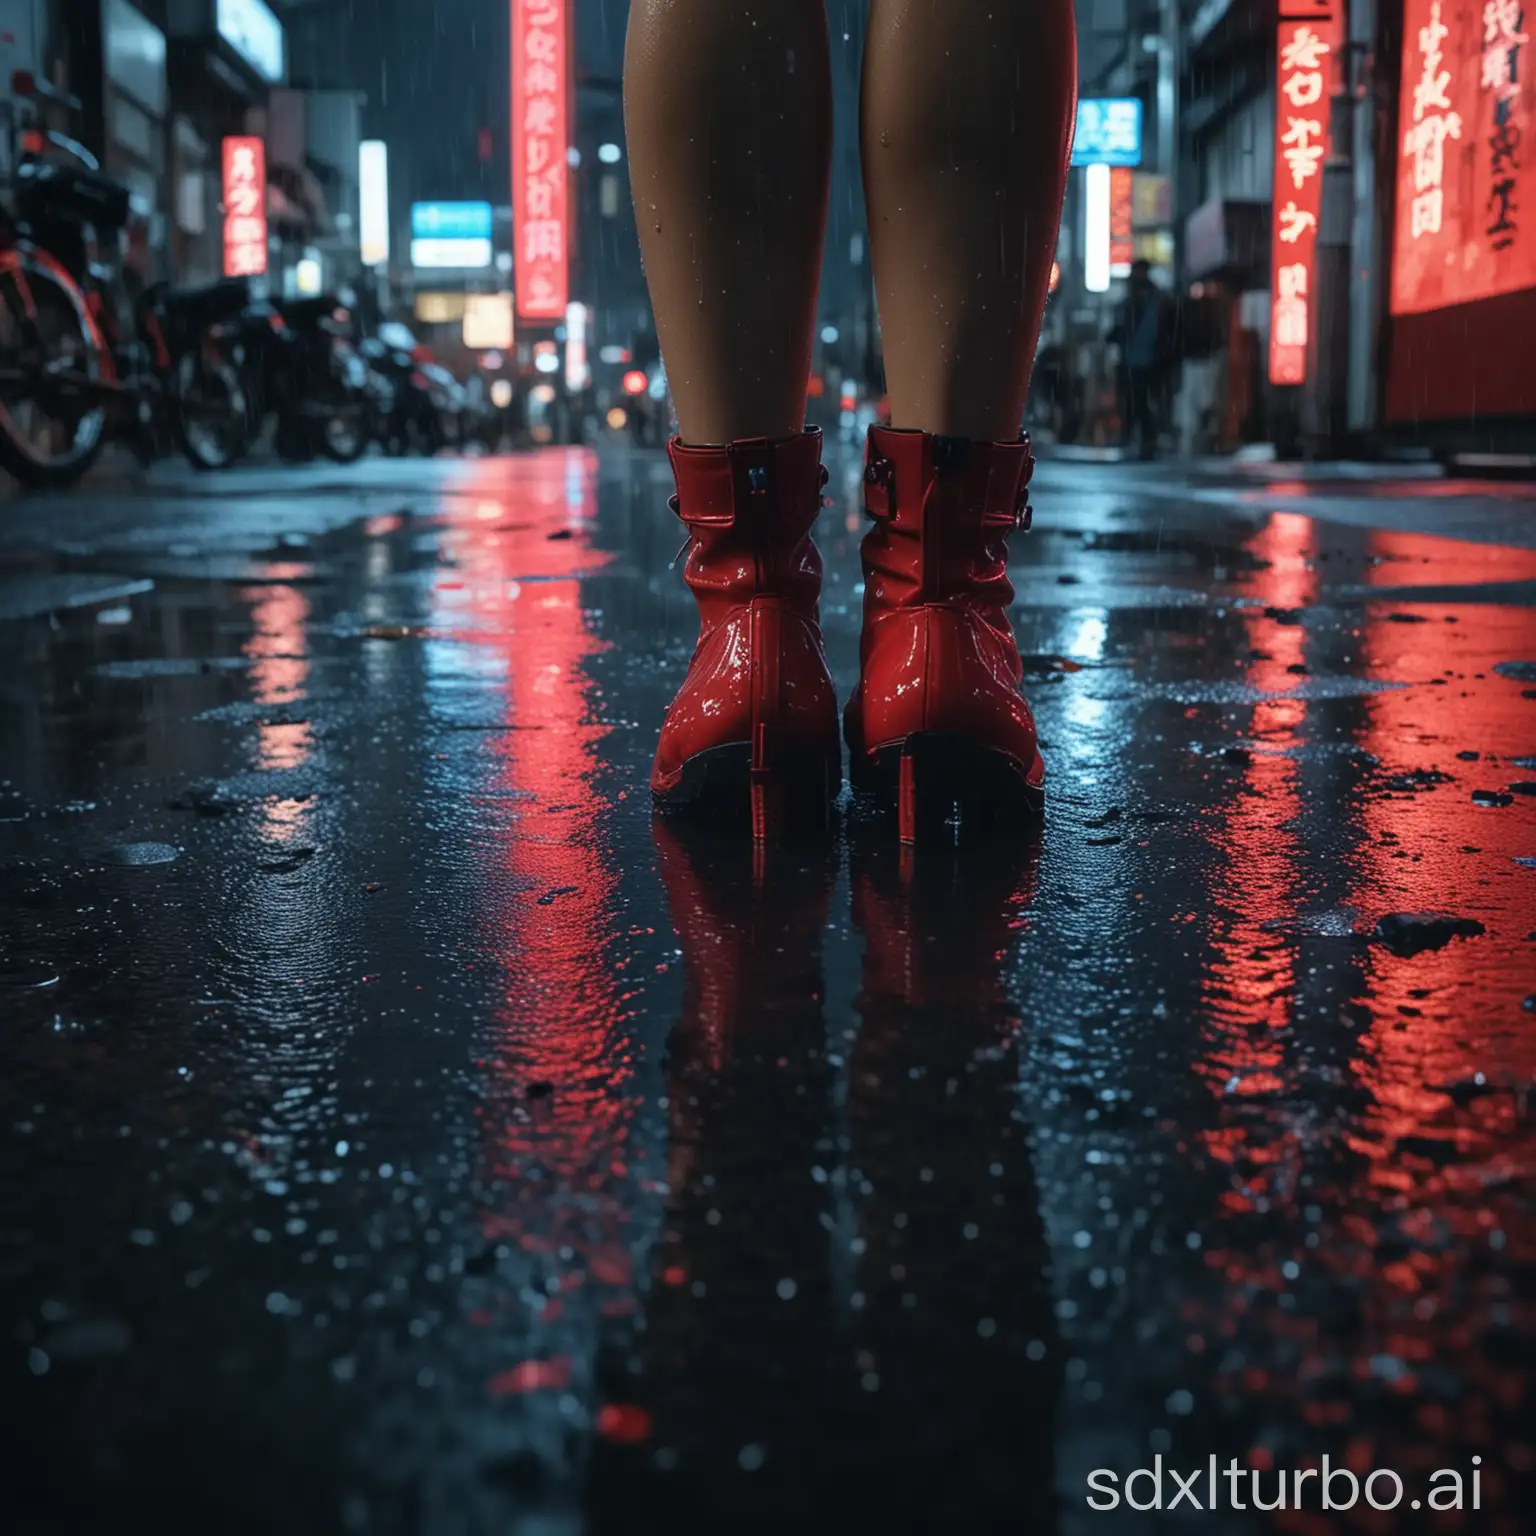 Cyberpunk-Tokyo-Night-Dramatic-Scene-of-Beautiful-Legs-in-Neonlit-Rain